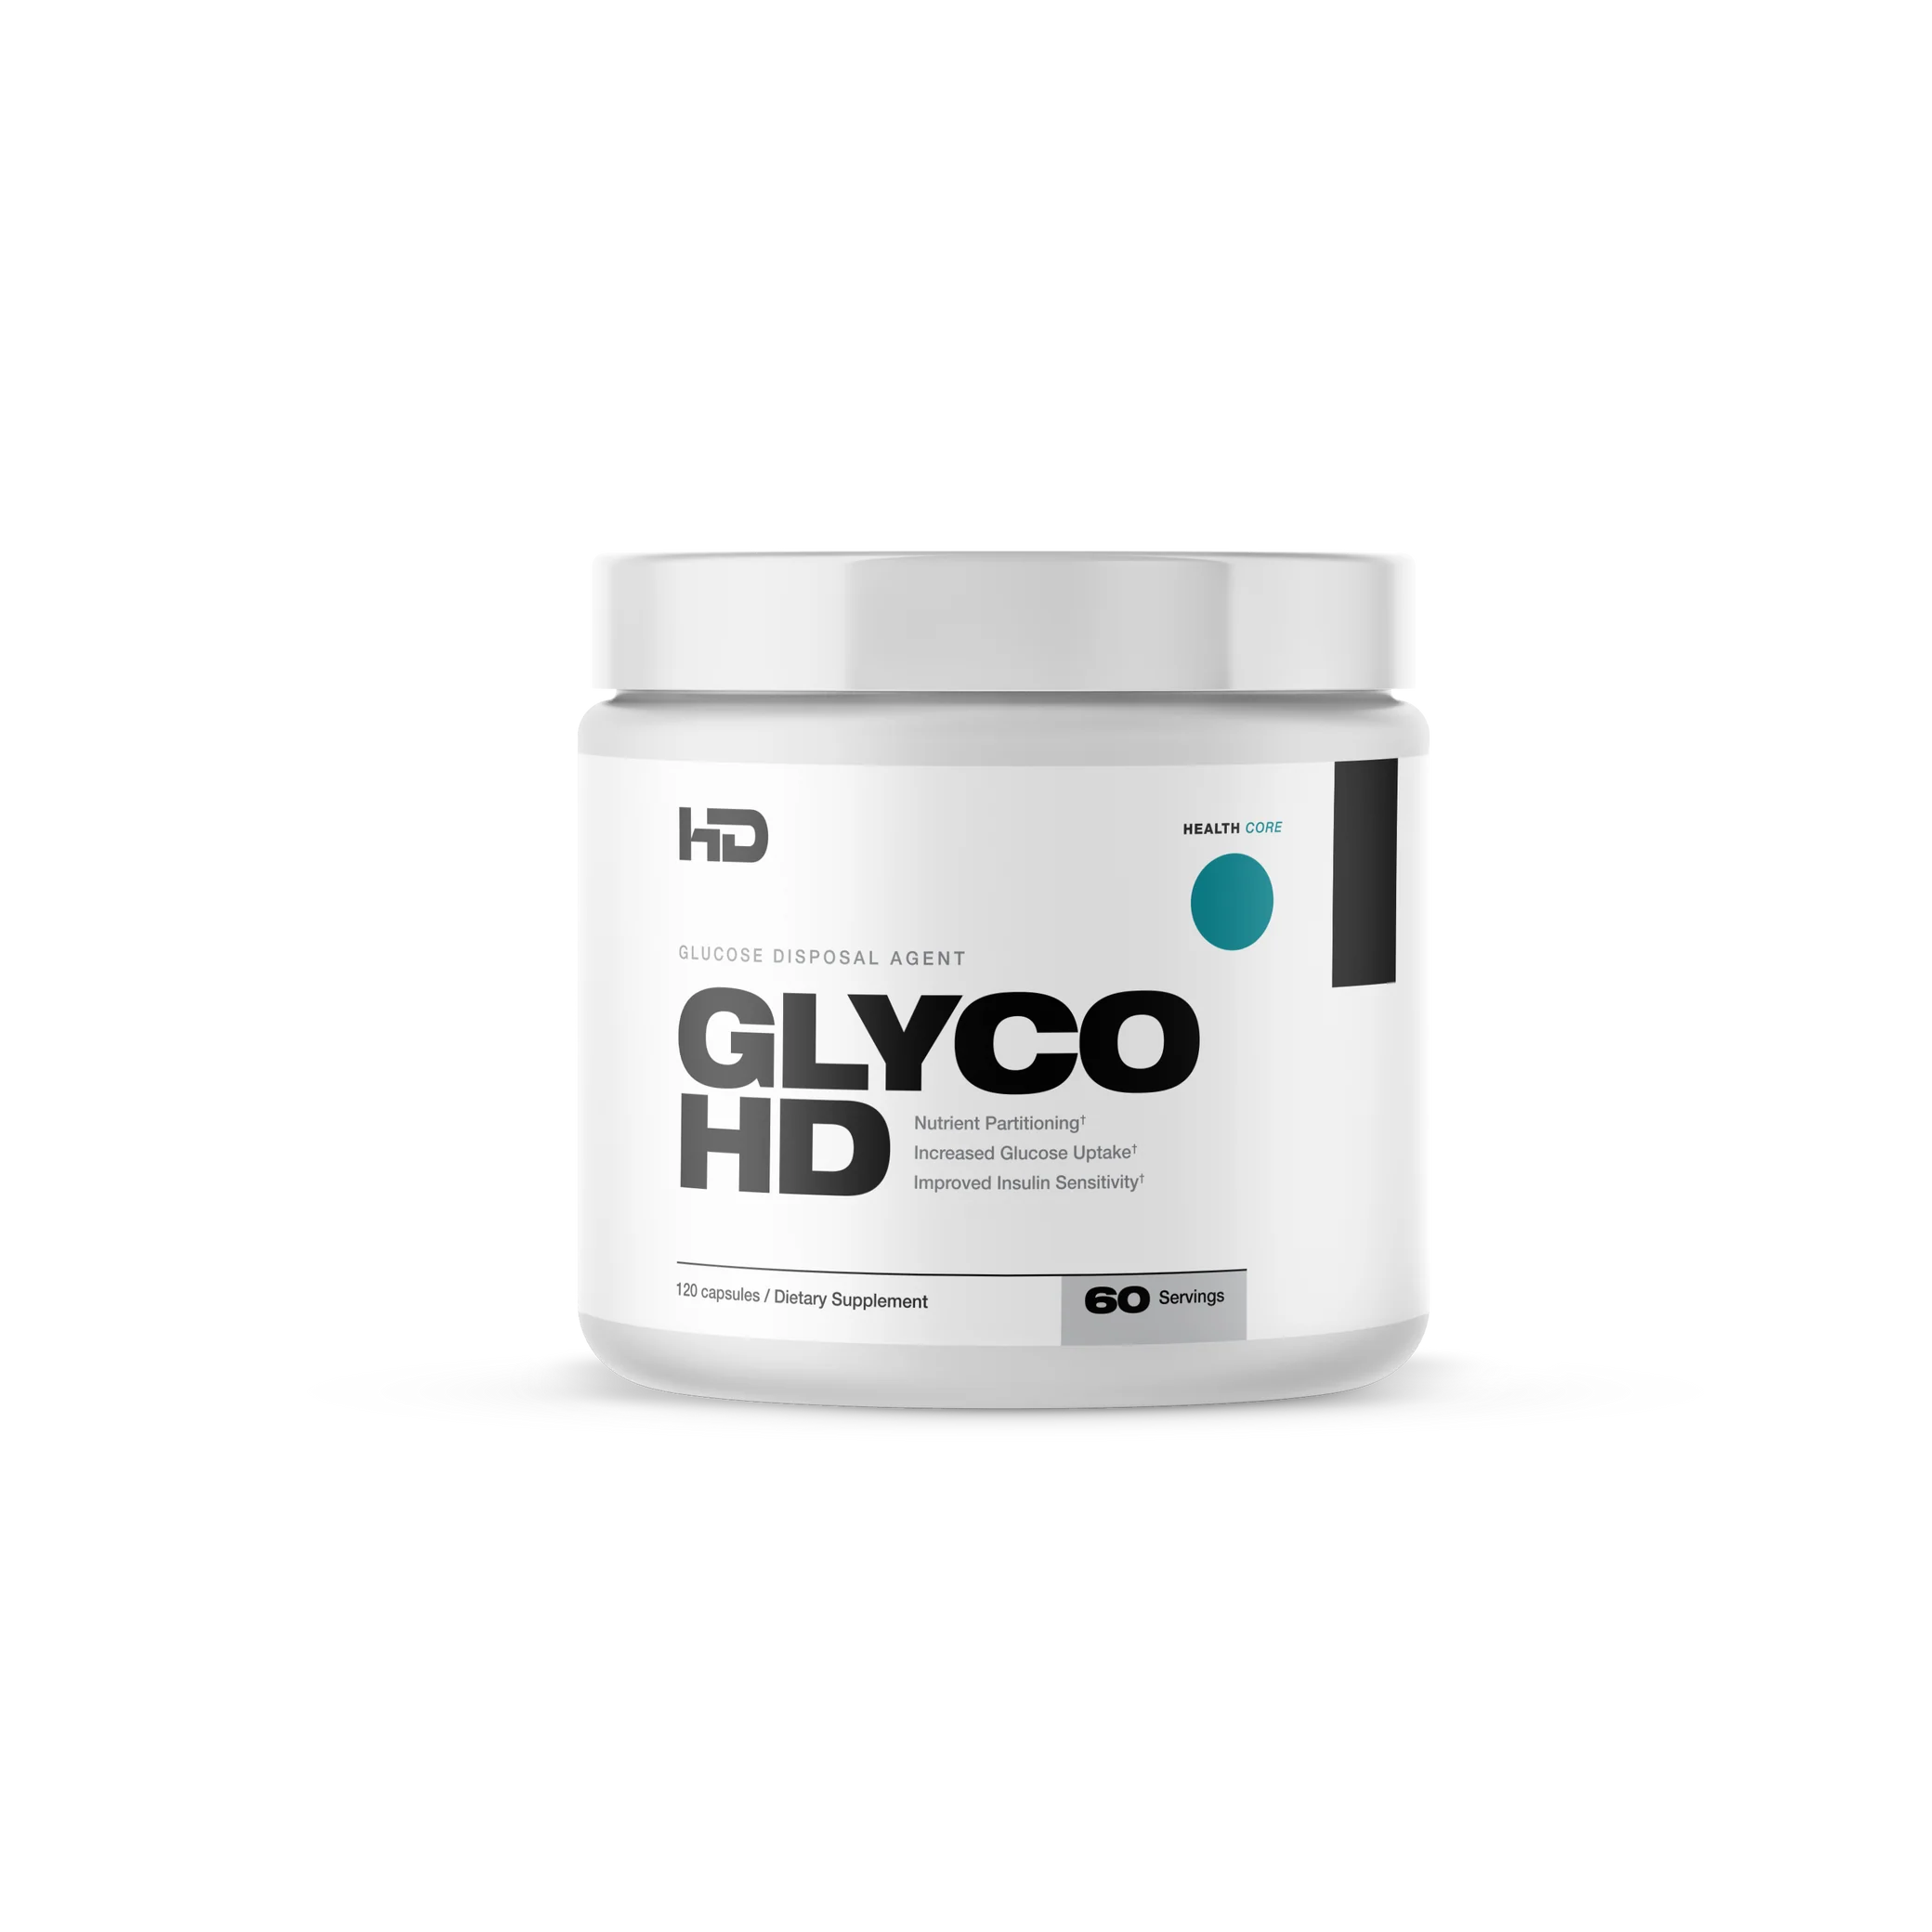 HD Muscle GlycoHD 60 serving